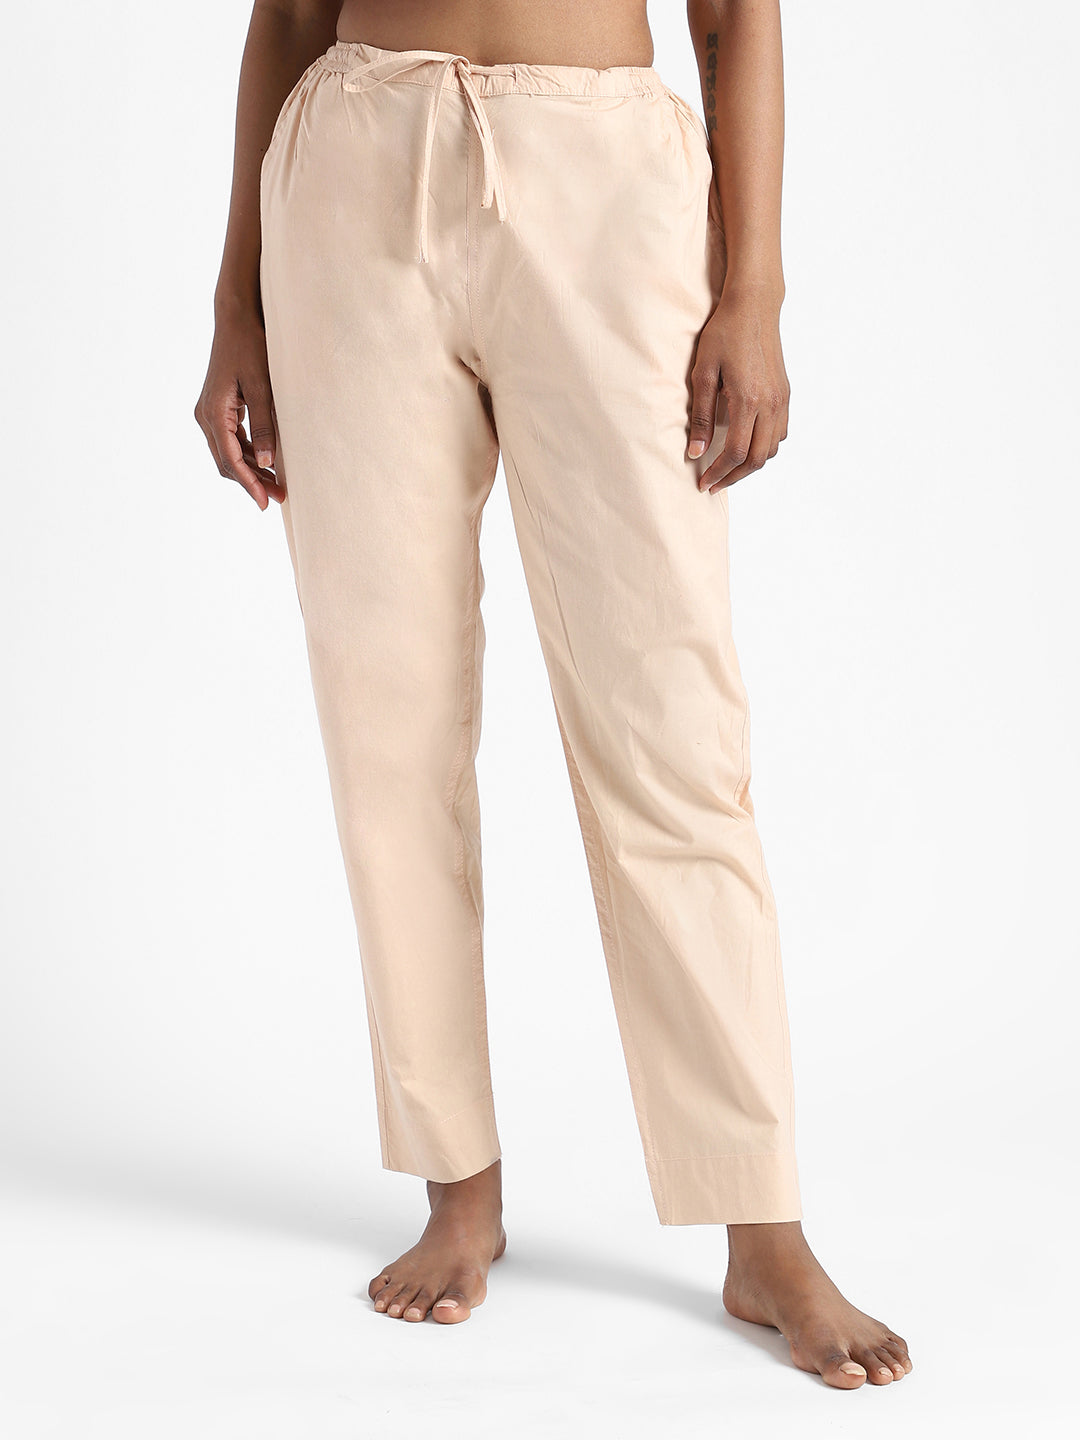 Sandal Wood Women's Organic Cotton & Natural Dyed Slim Fit Pants